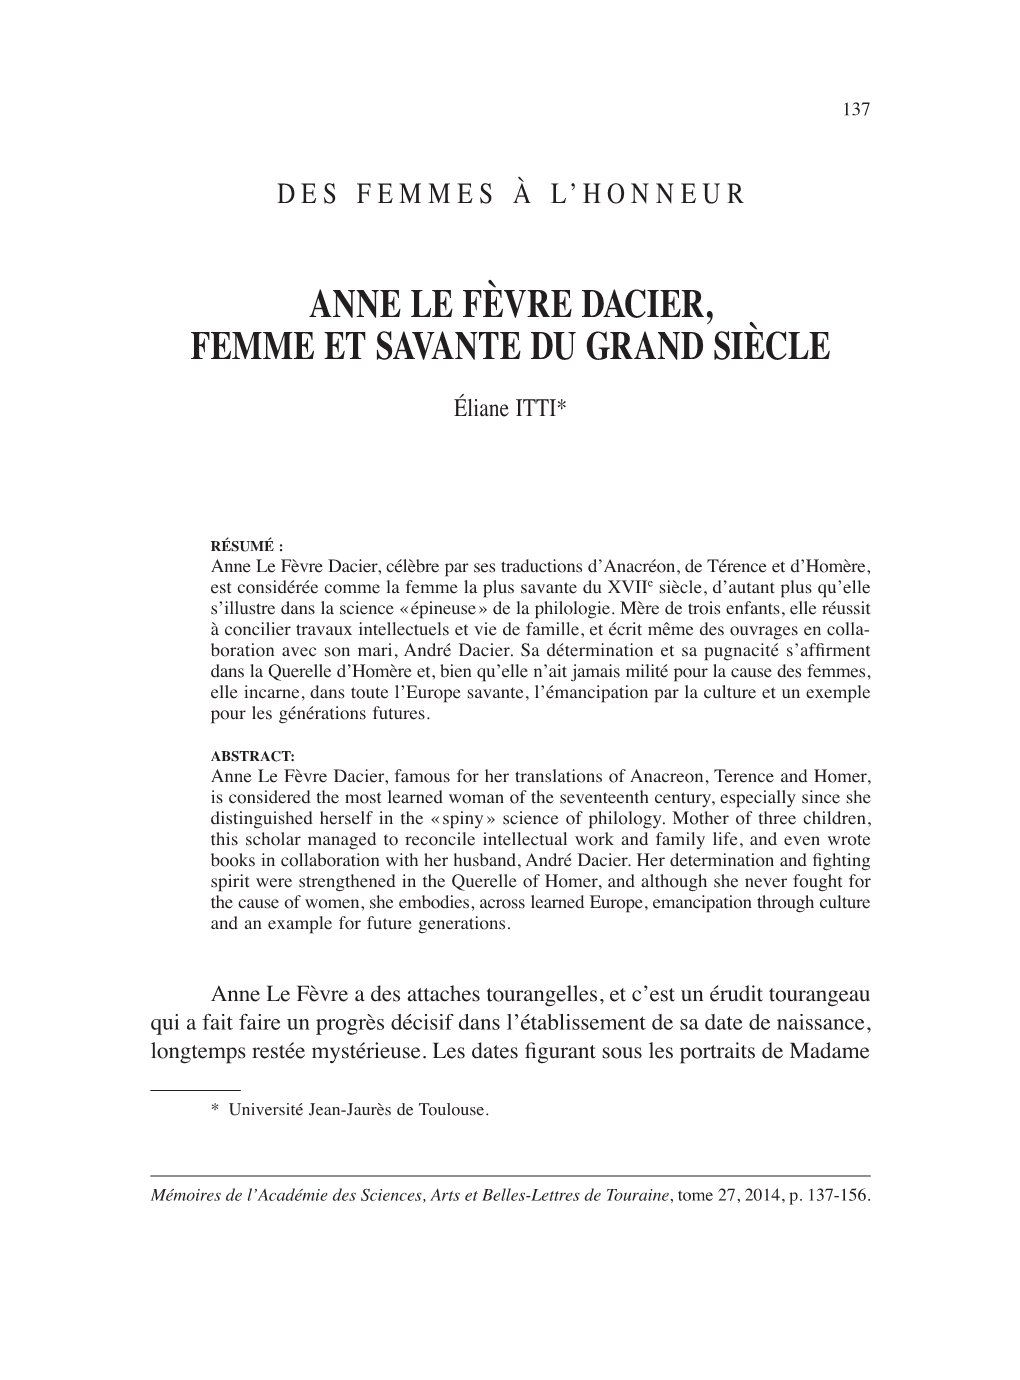 ITTI Anne Le Fèvre Dacier.Indd